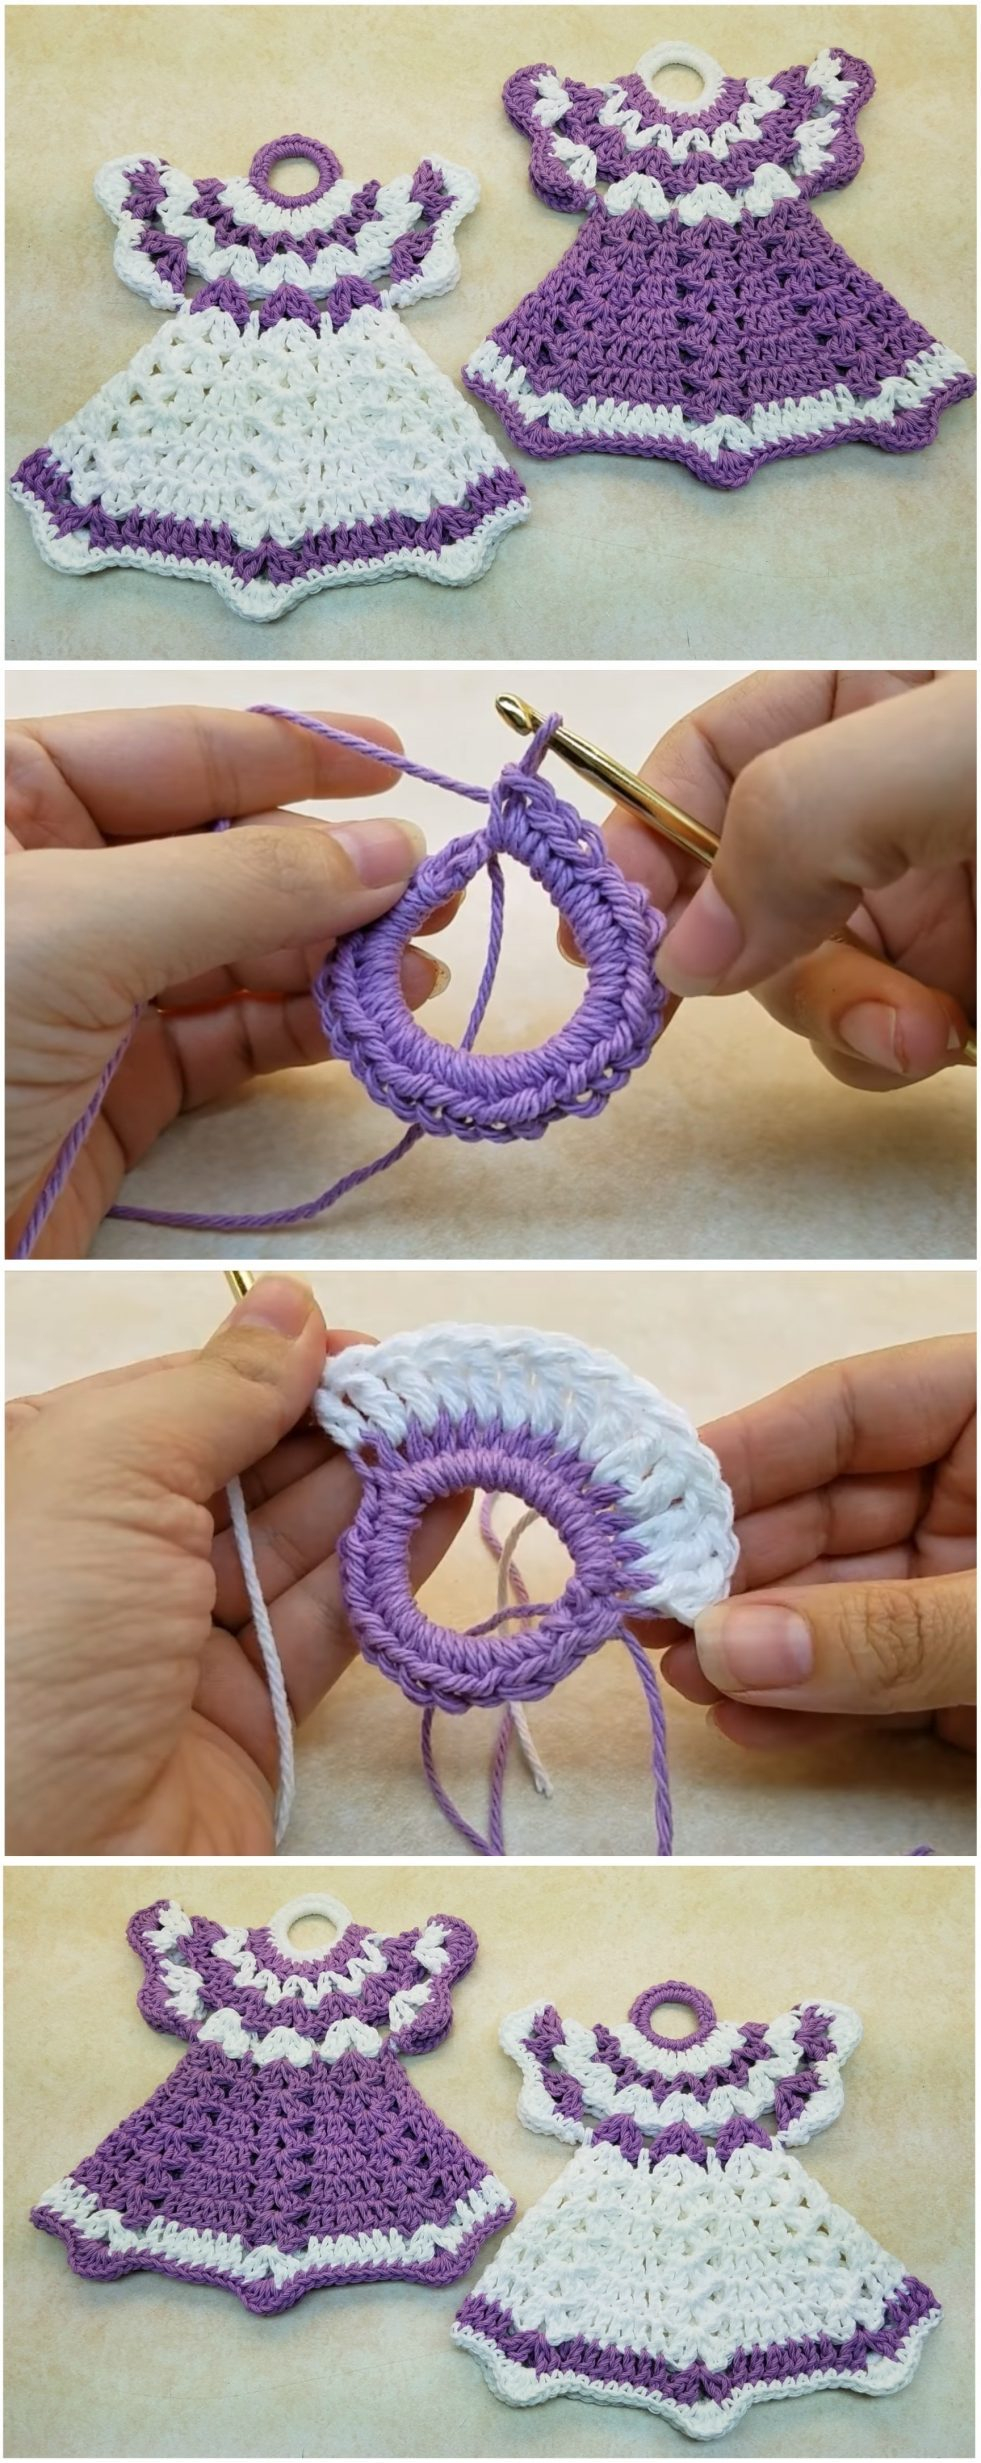 Vintage Crochet Potholders Free Patterns How To Crochet Vintage Dress Potholders Yarn Hooks